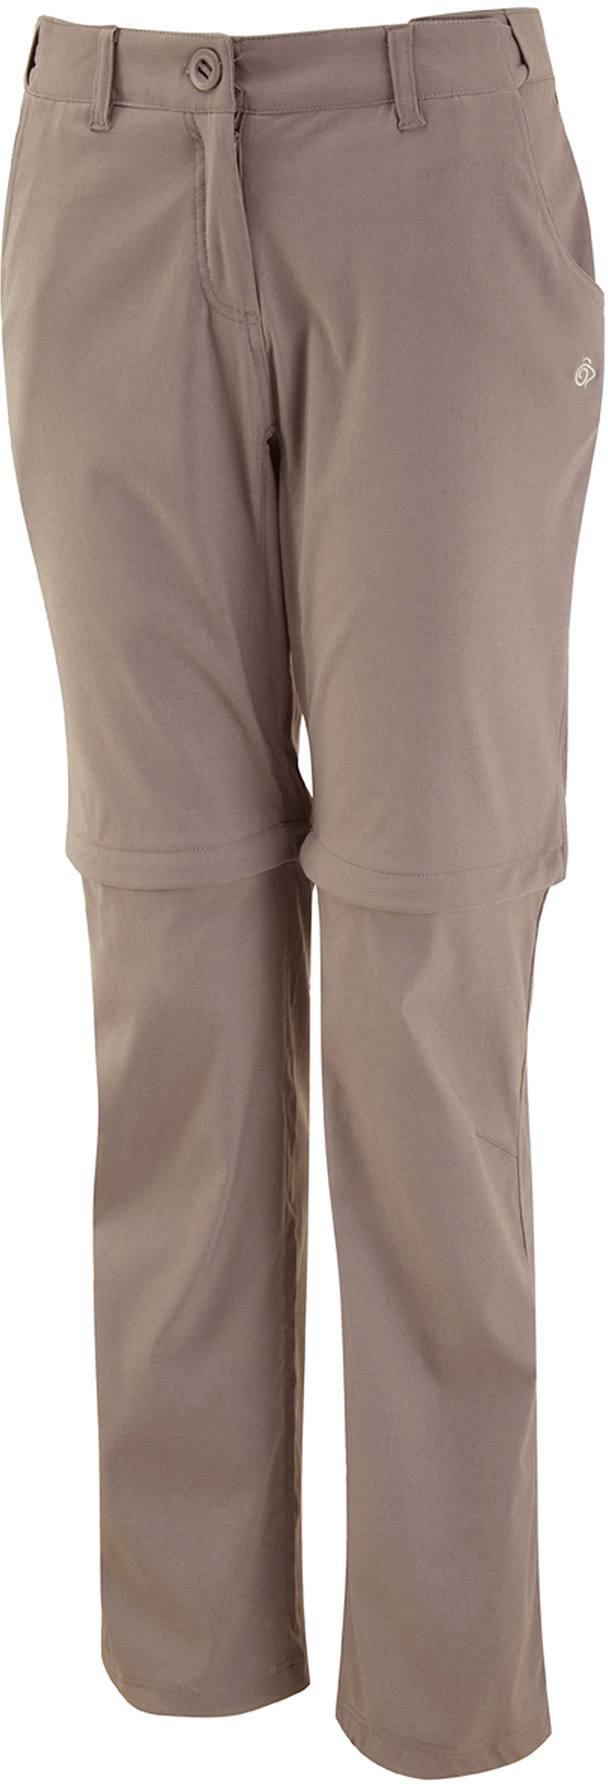 Nosilife Pro Convertible Trousers Women 2015 Sand 10